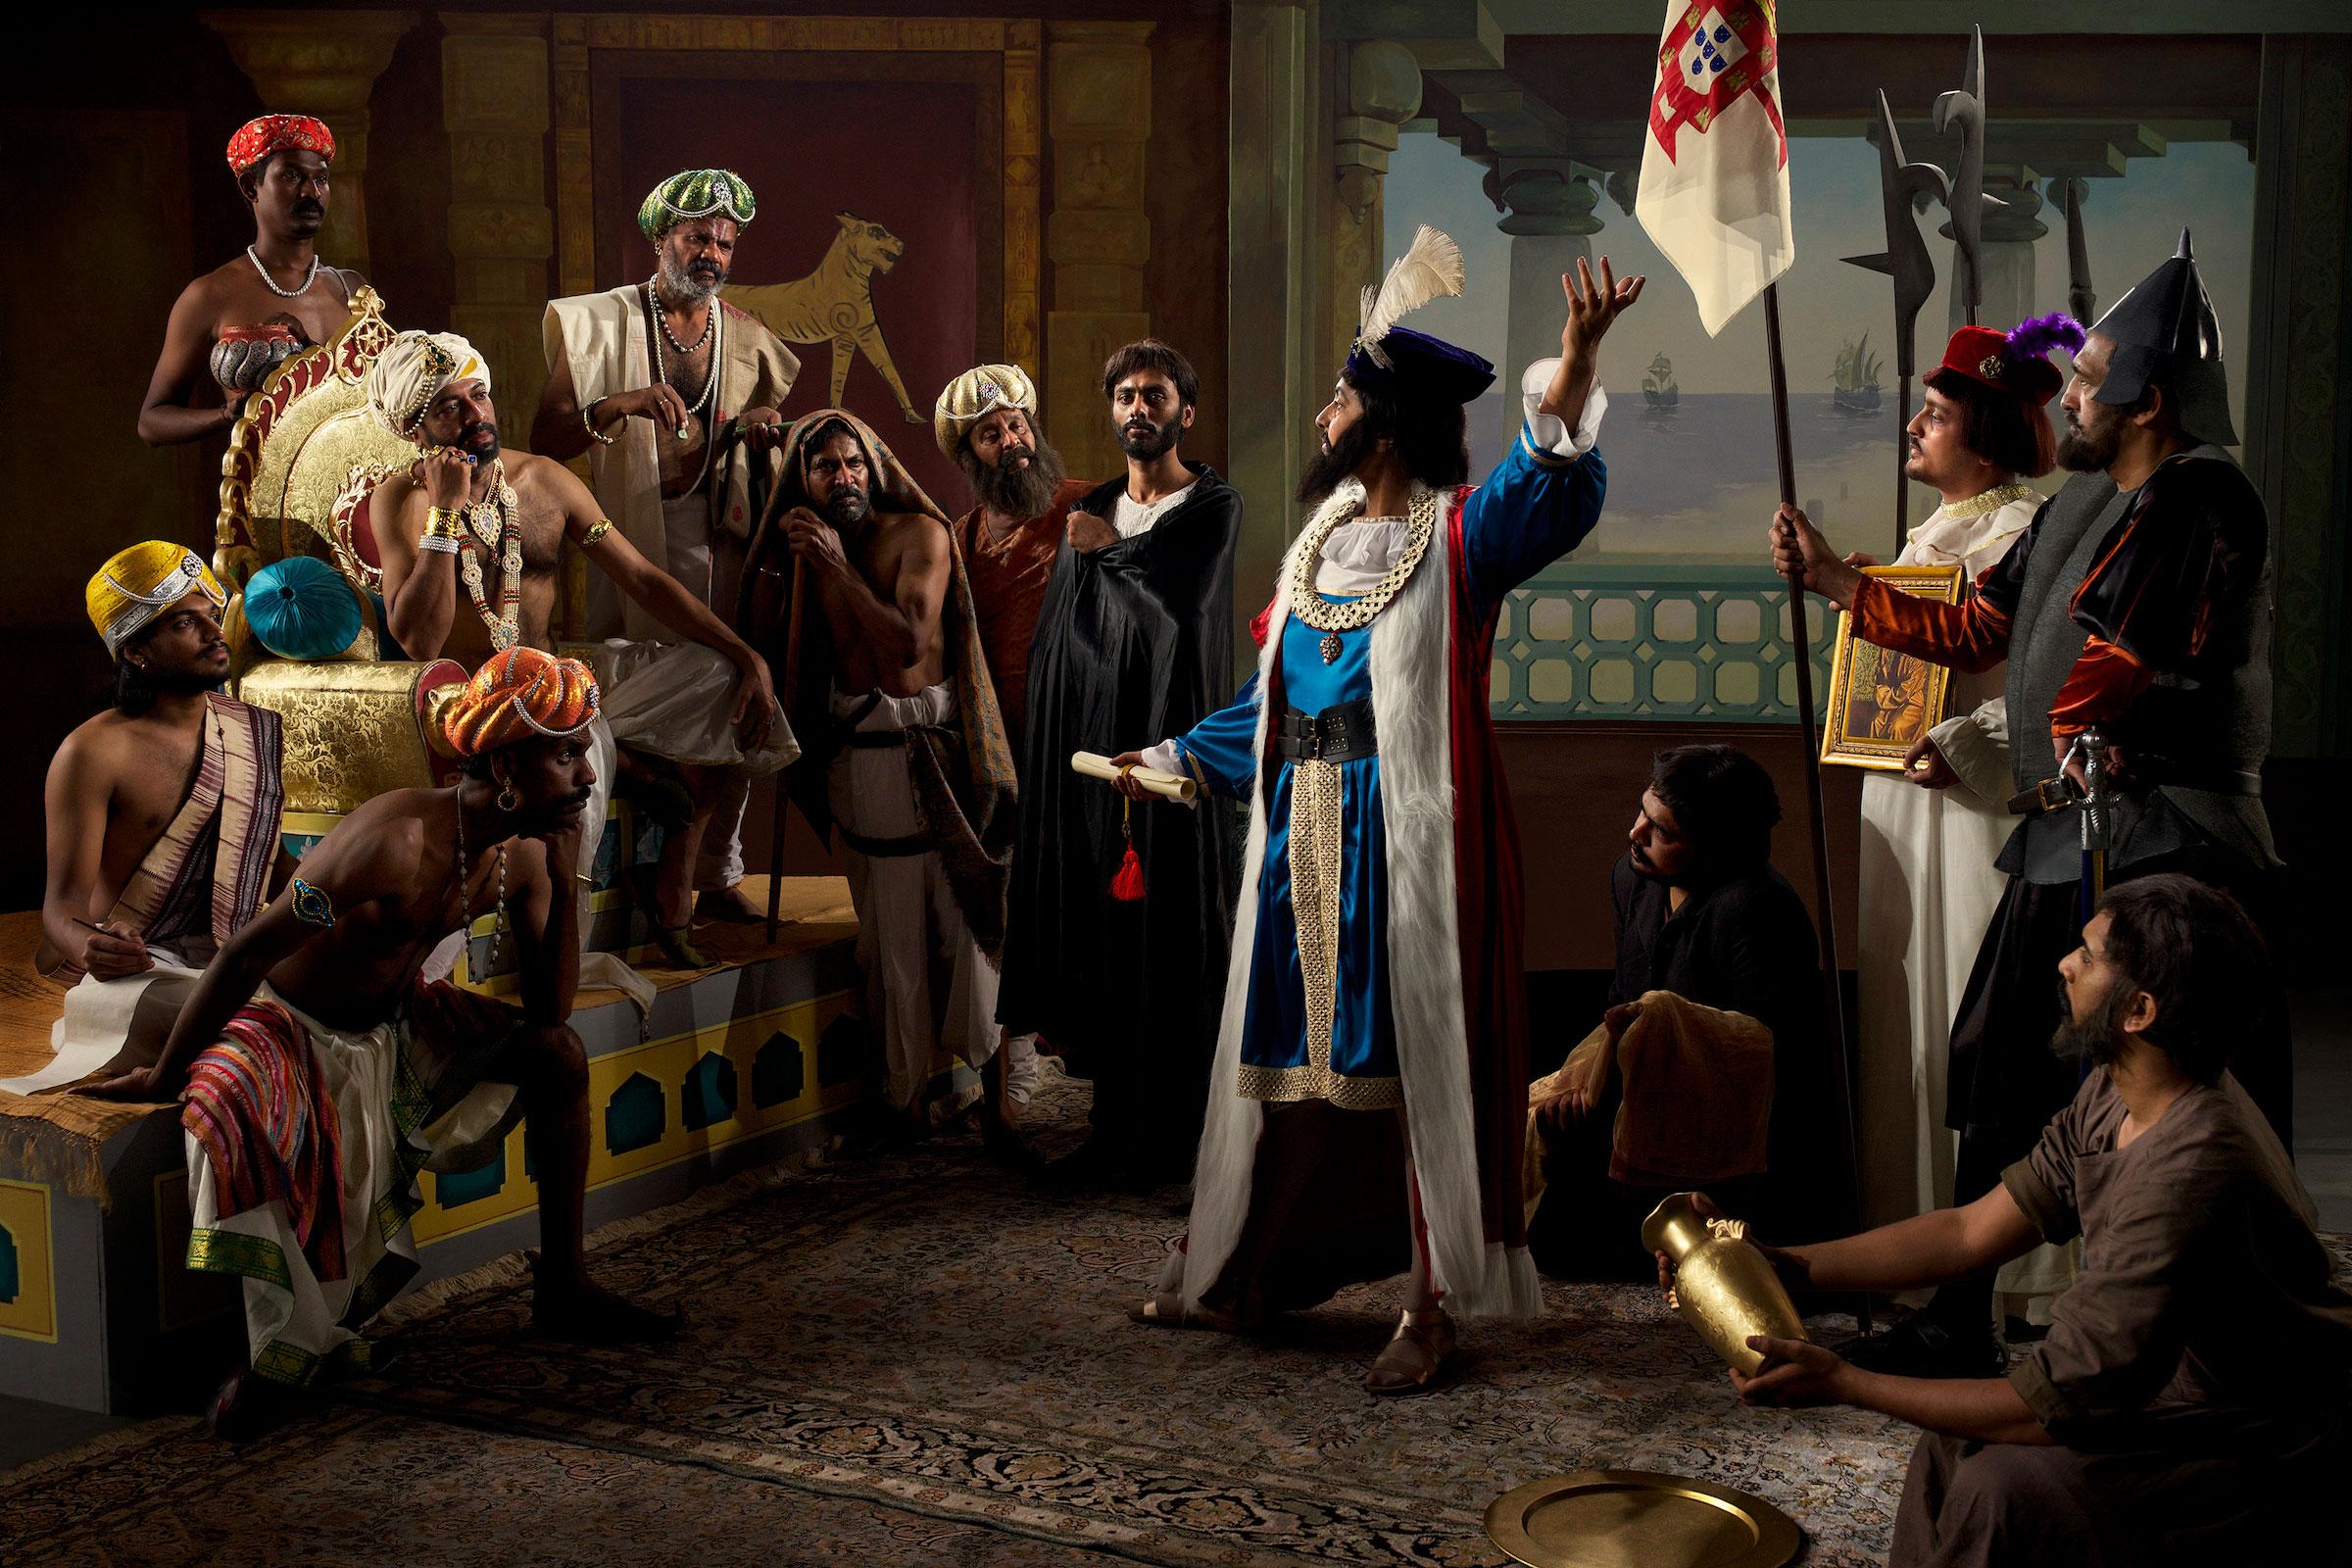 “The Arrival of Vasco da Gama,” by artist Pushpamala N., 2014